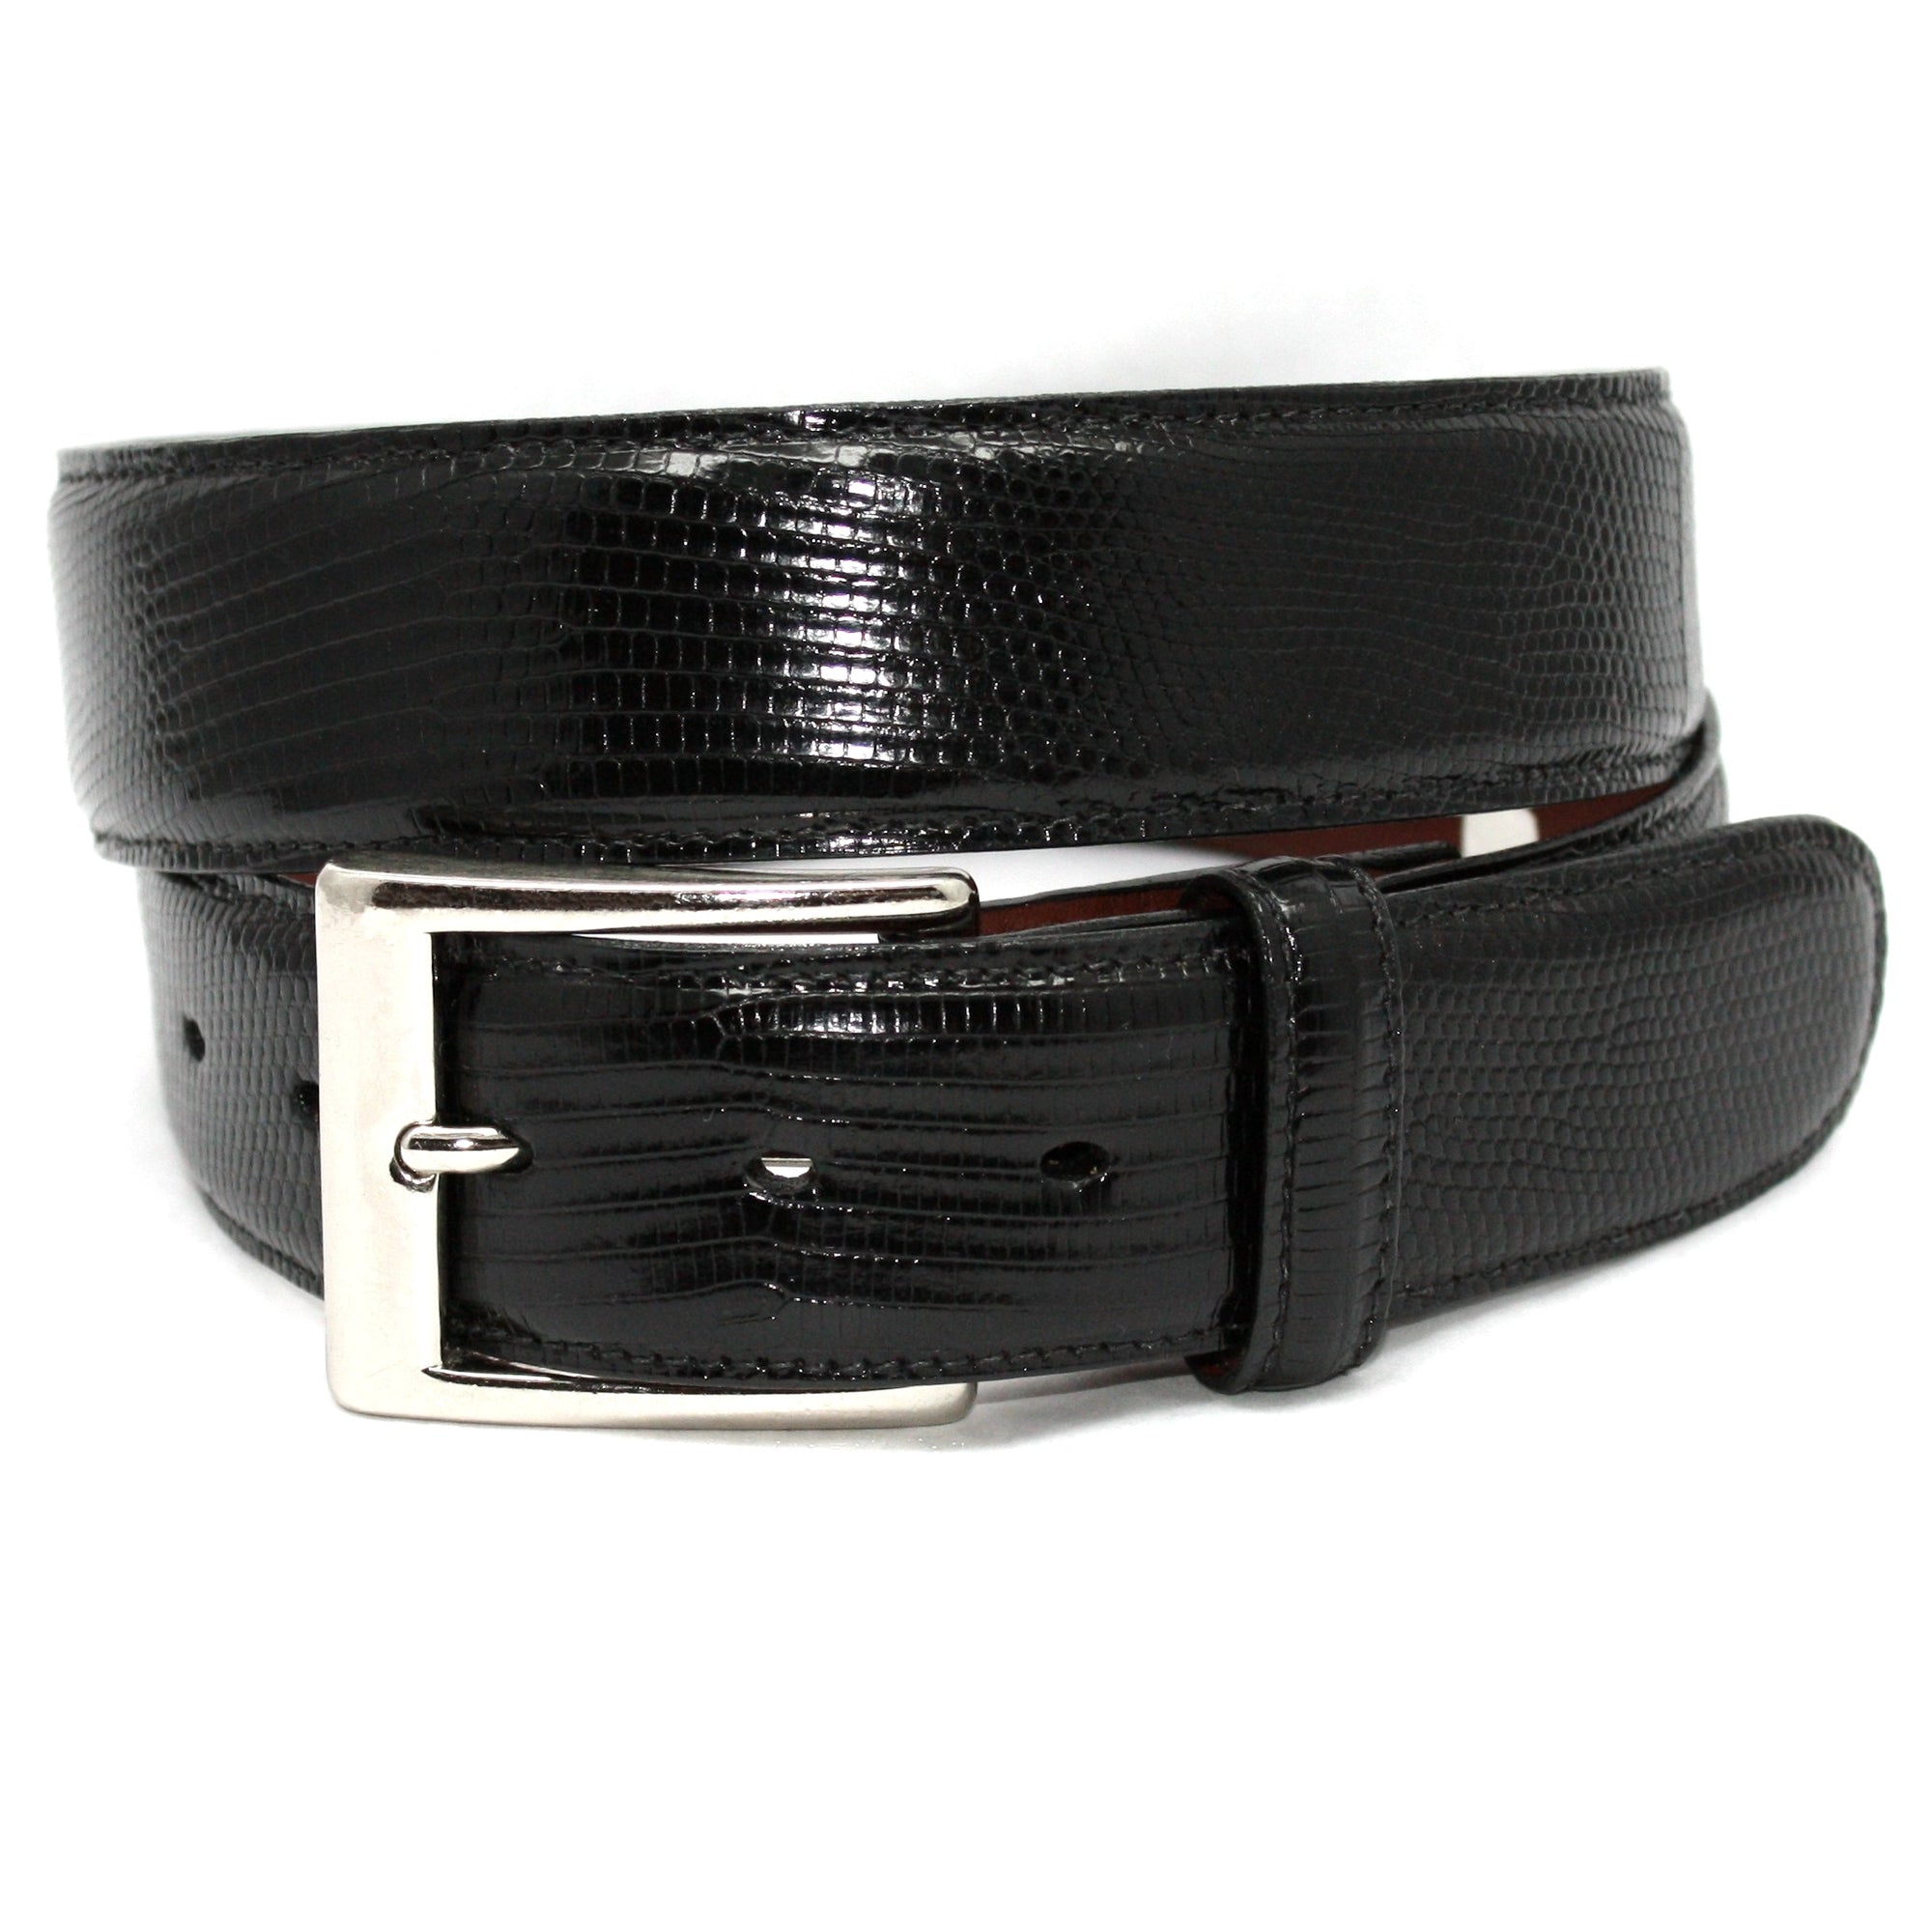 Ringmark Lizard Belt in Black by Torino Leather